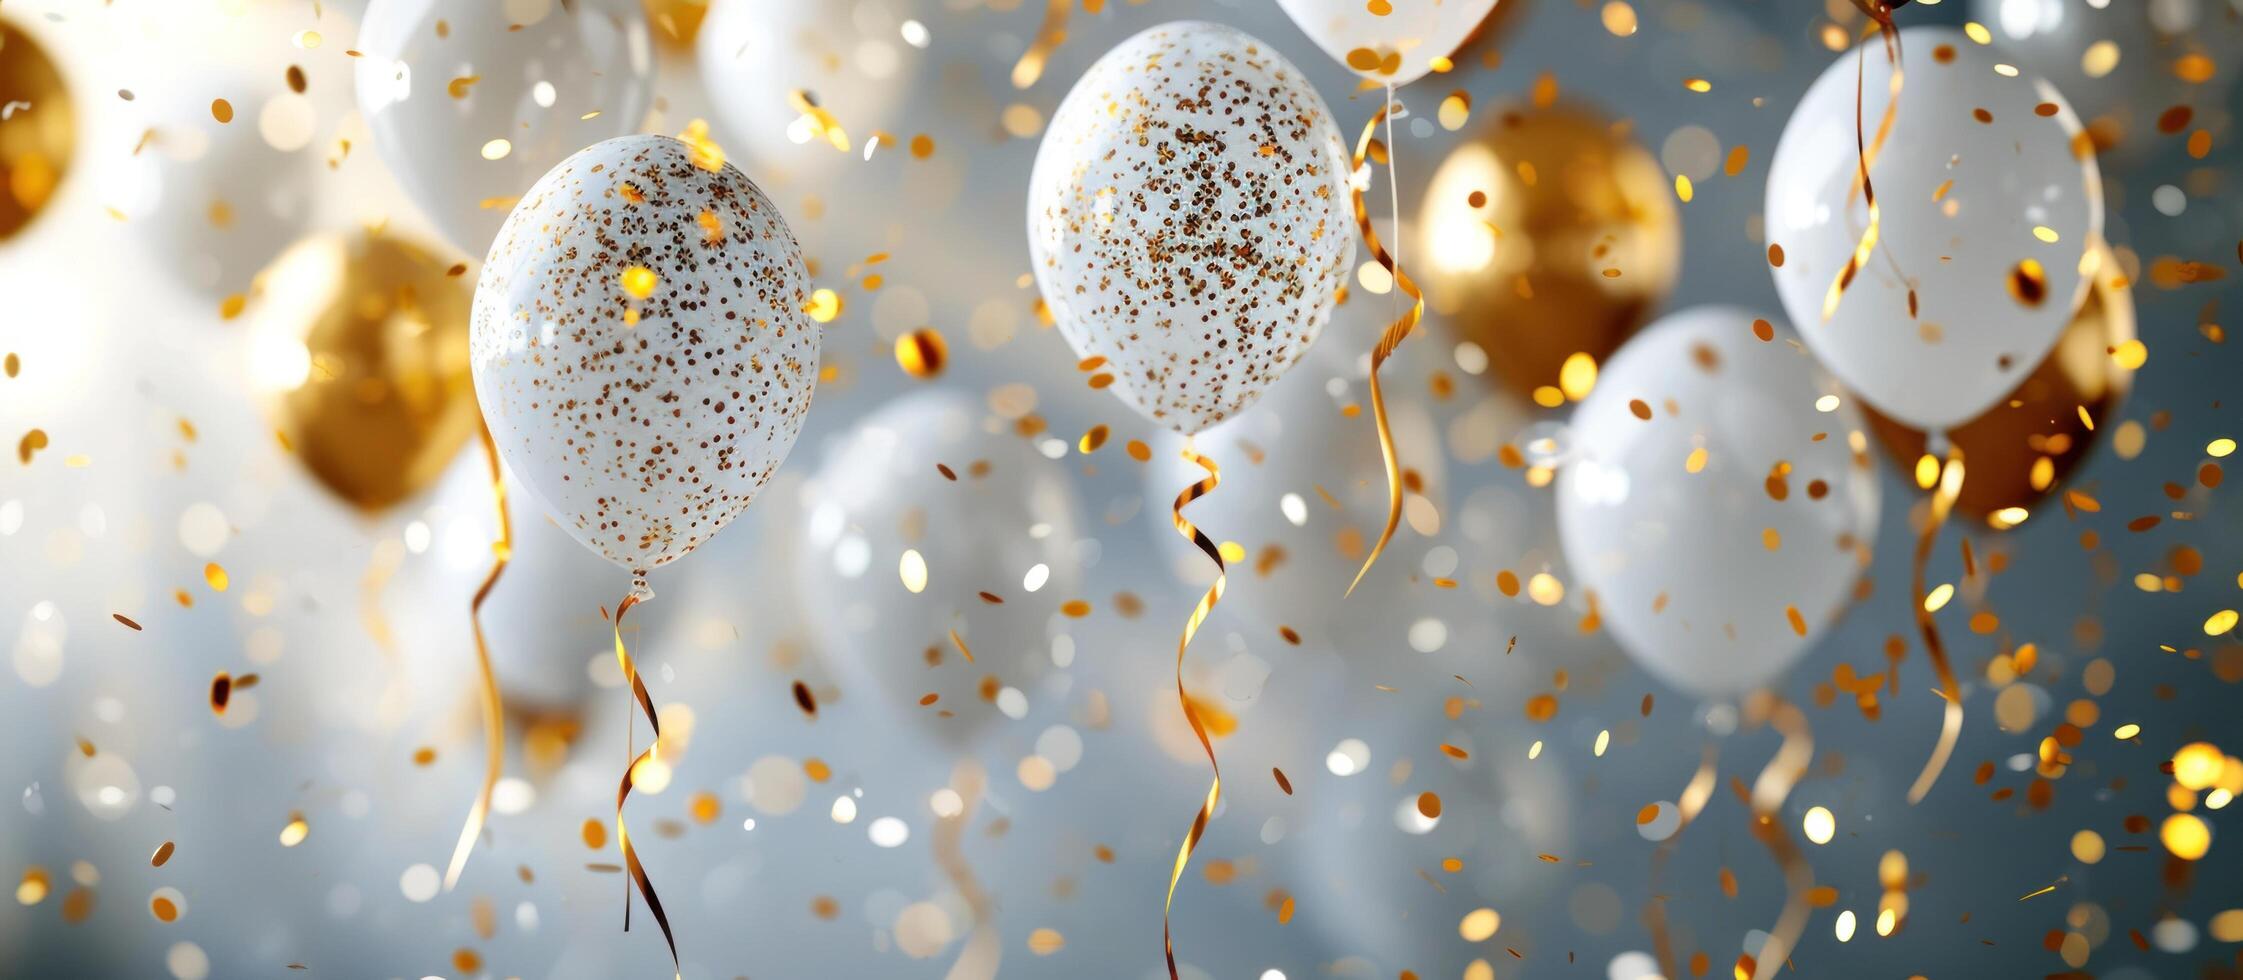 AI generated celebratory balloons on white background with white confetti photo